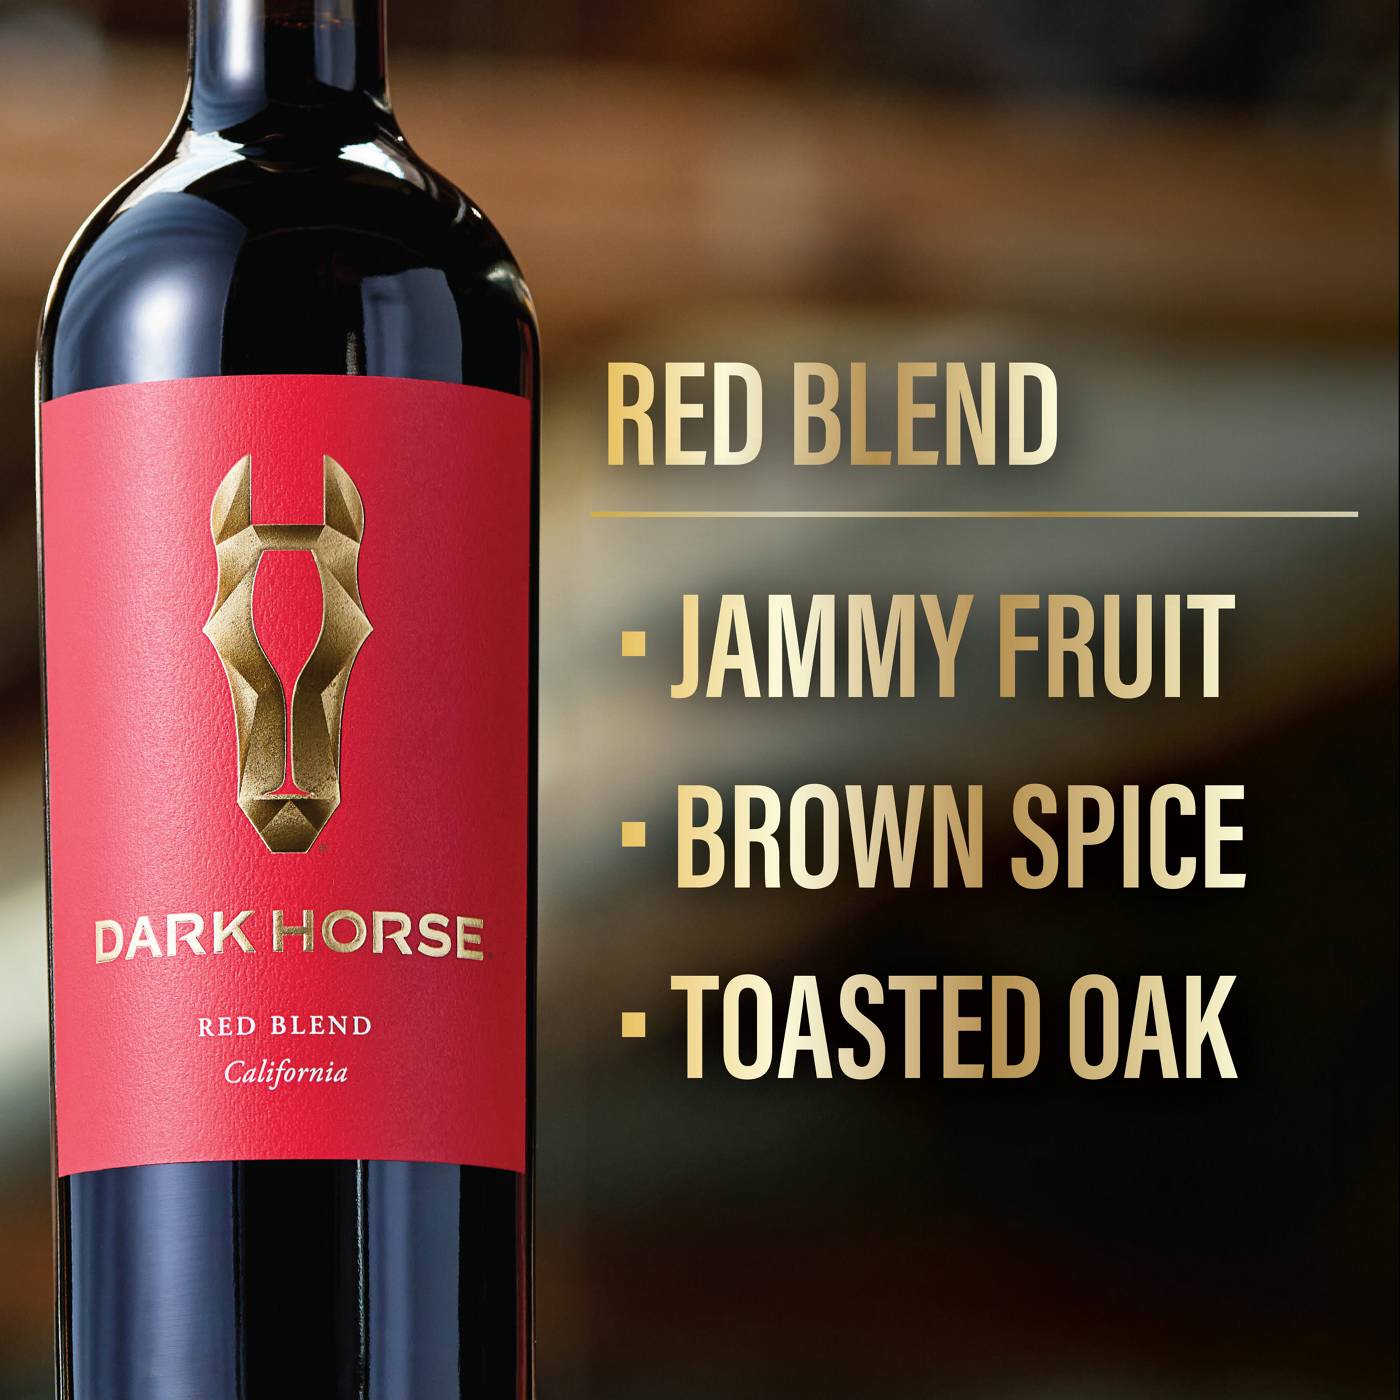 Dark Horse Big Red Blend Red Wine; image 3 of 4